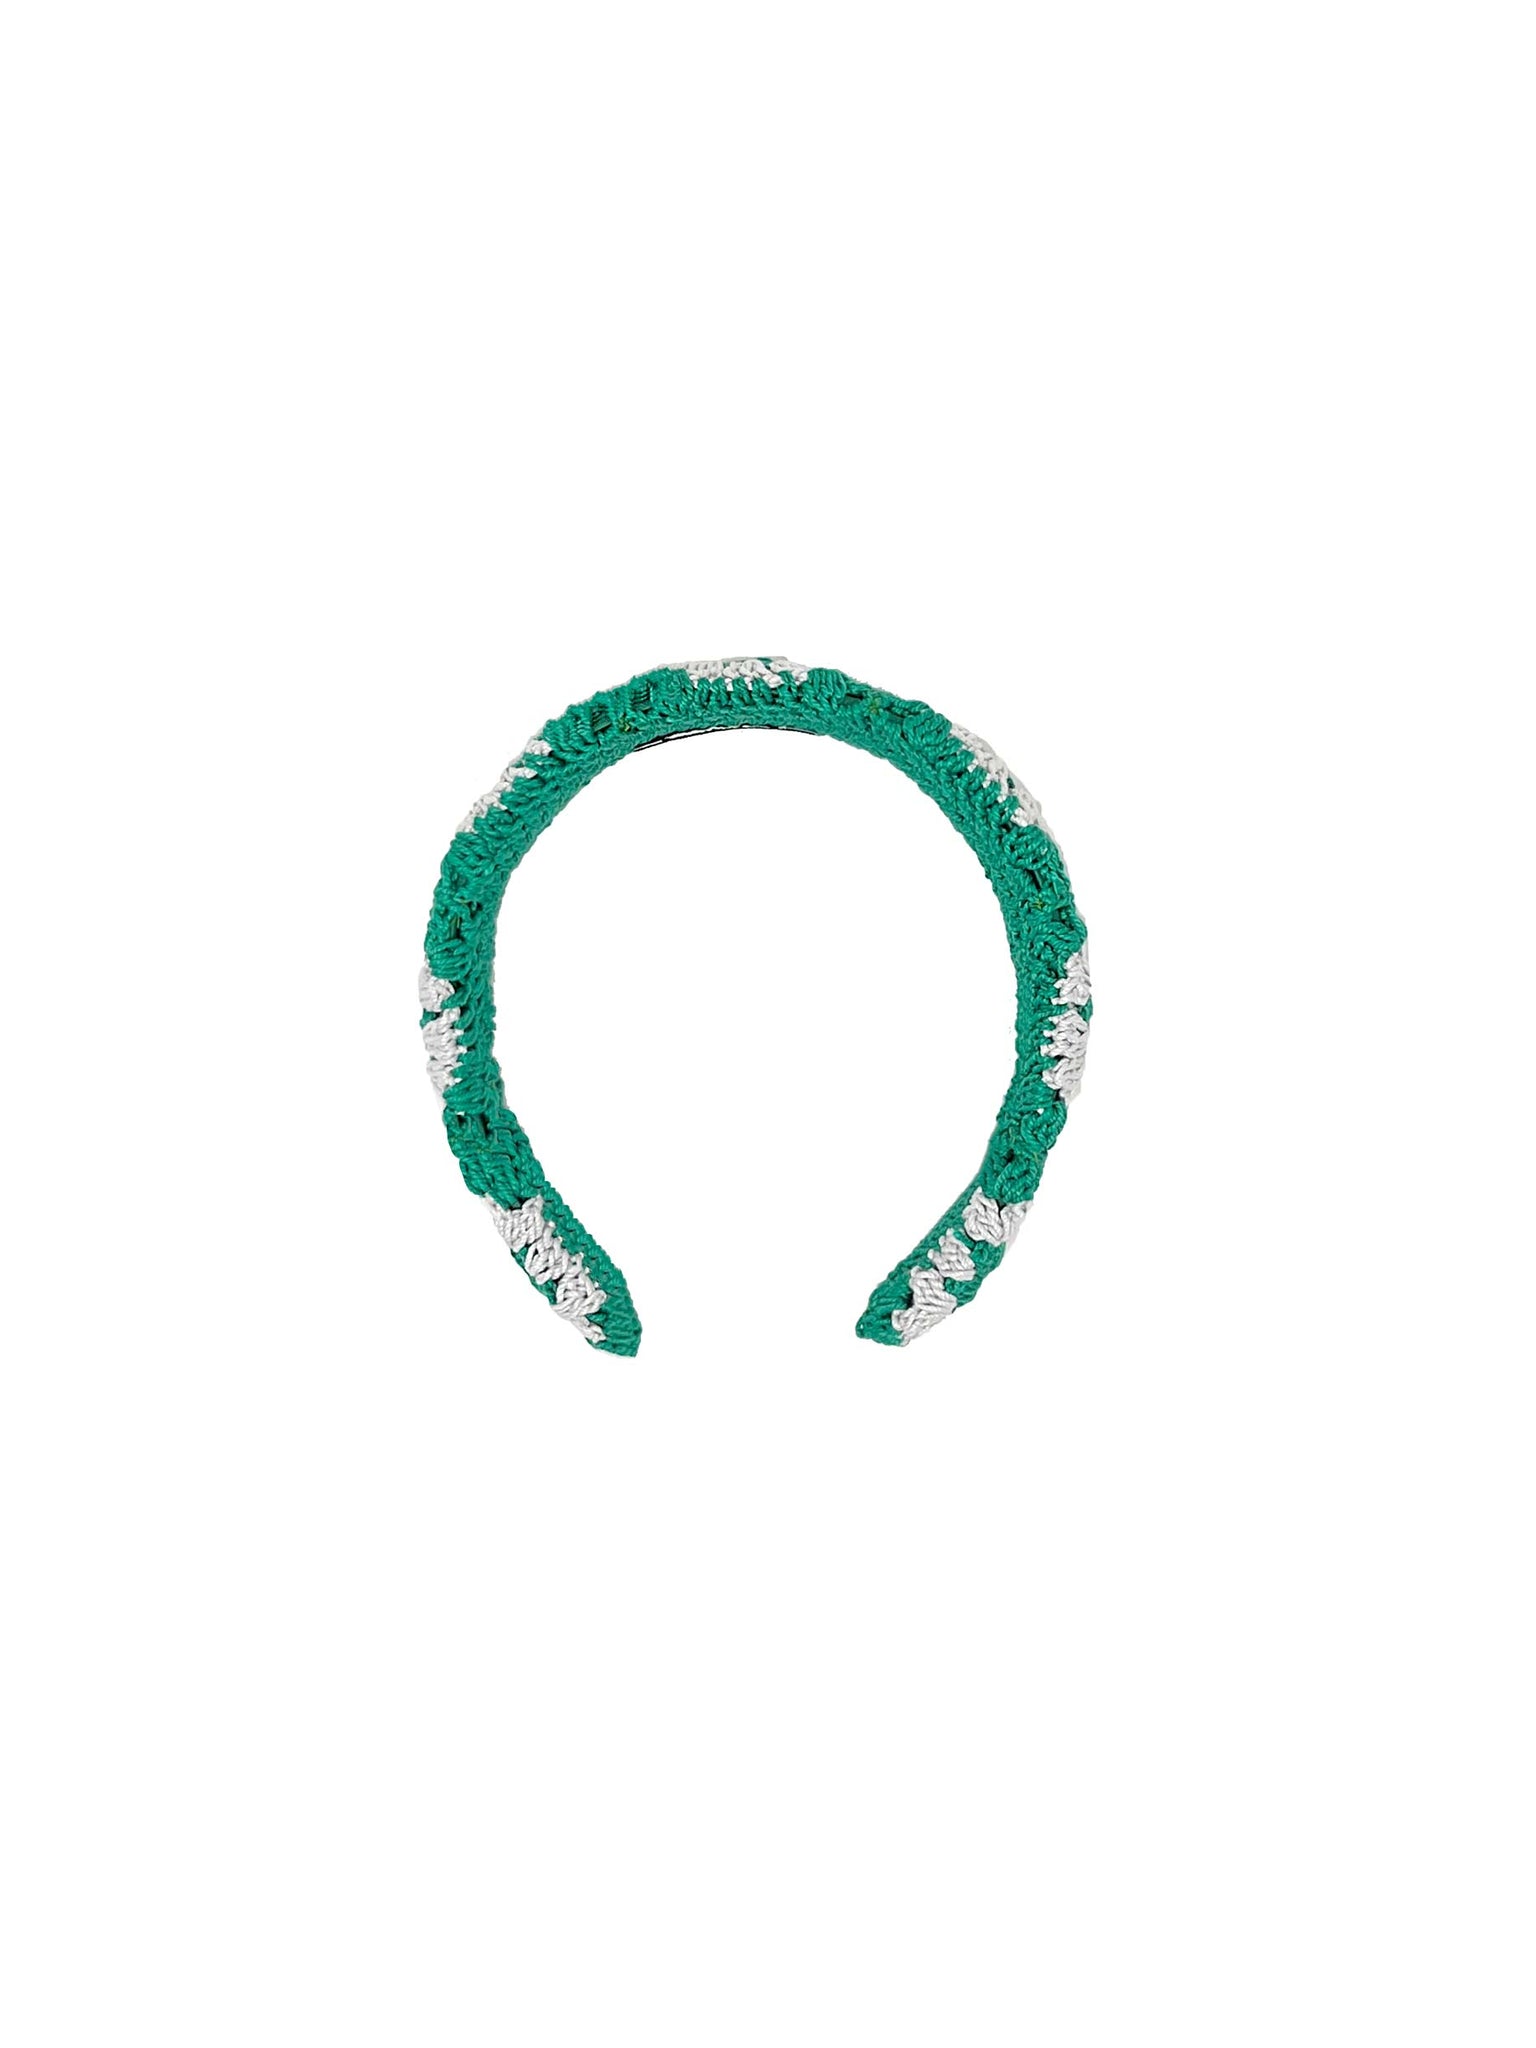 Emerald green and light grey crochet hairband